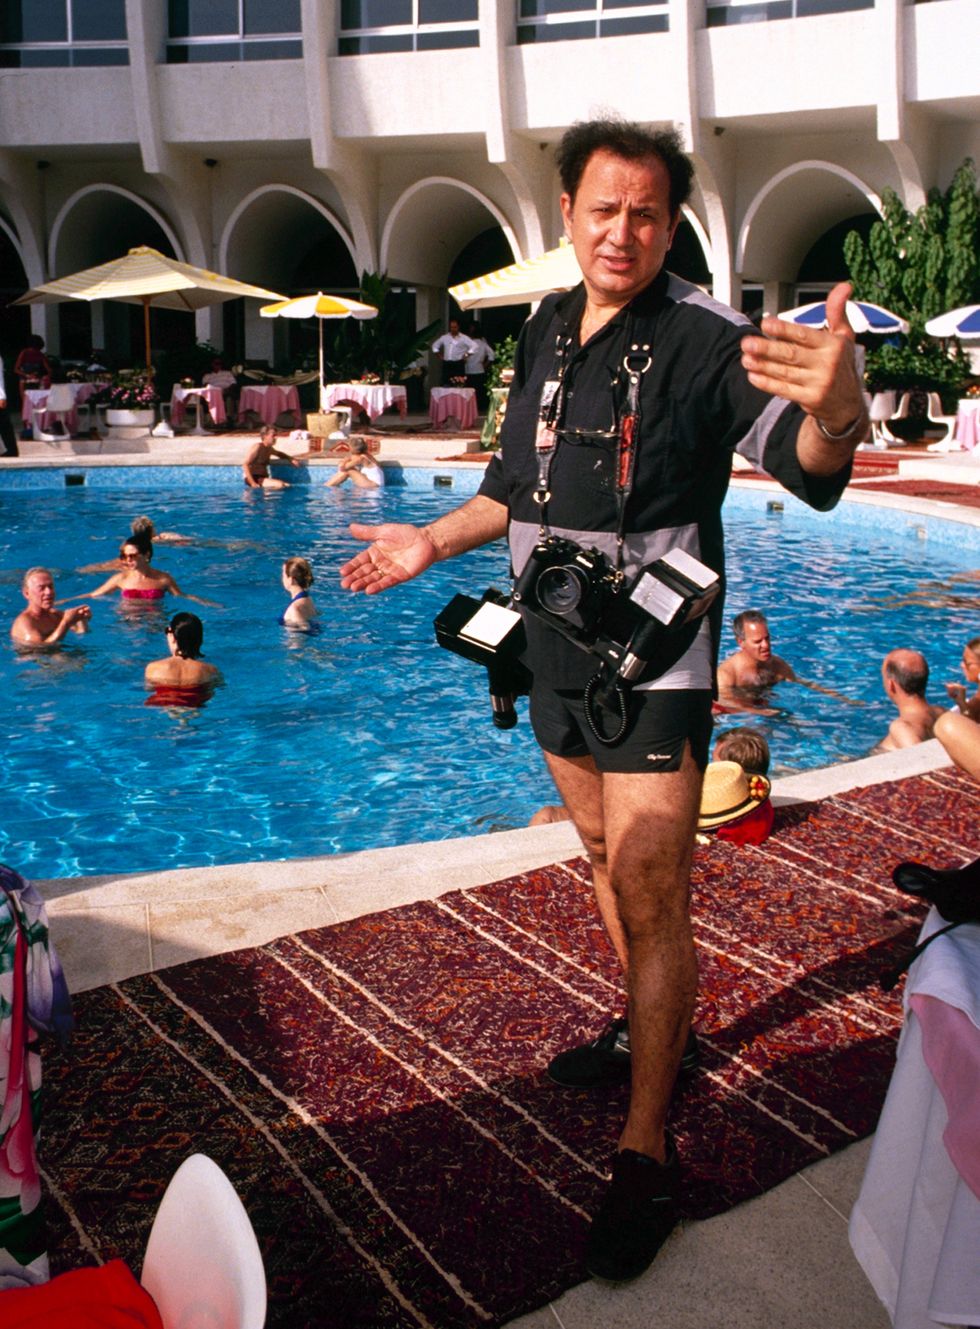 paparazzi photographer ron galella in 1990